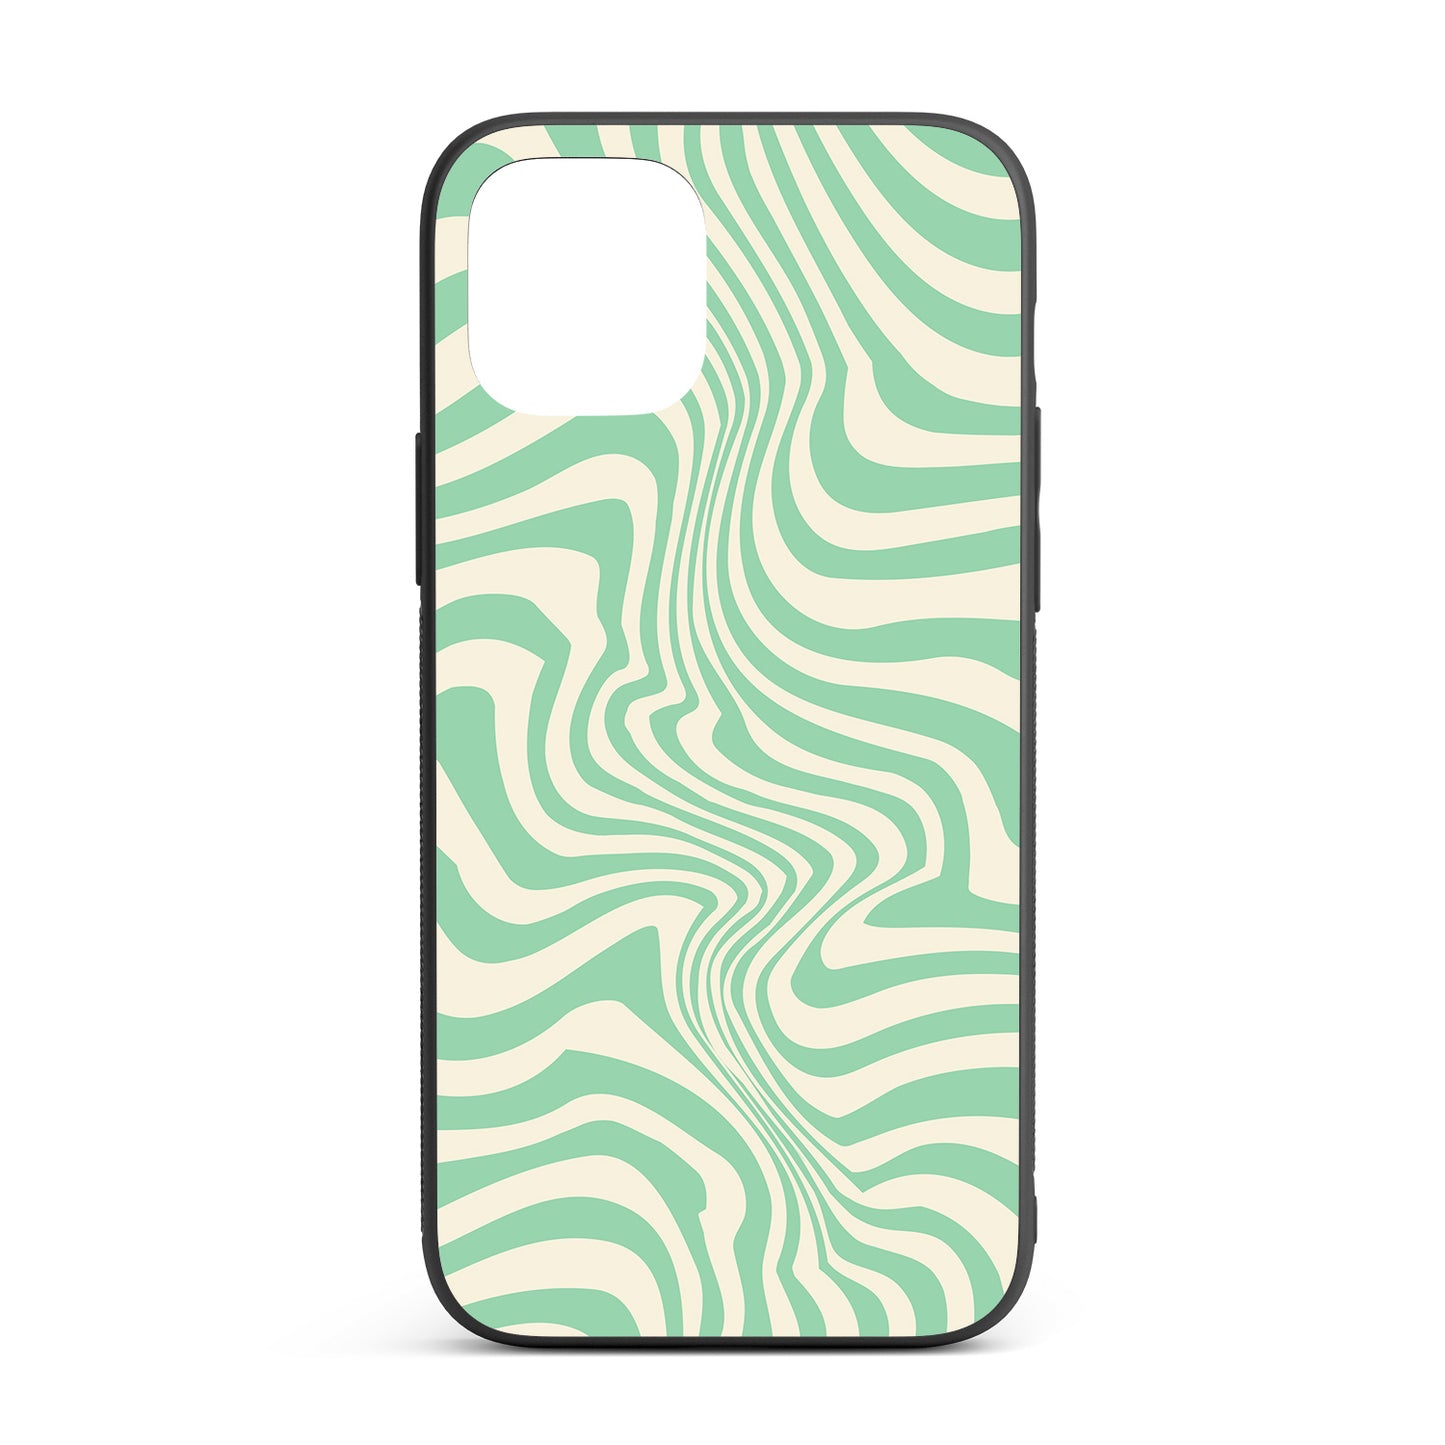 Pistachio Swirls iPhone glass case